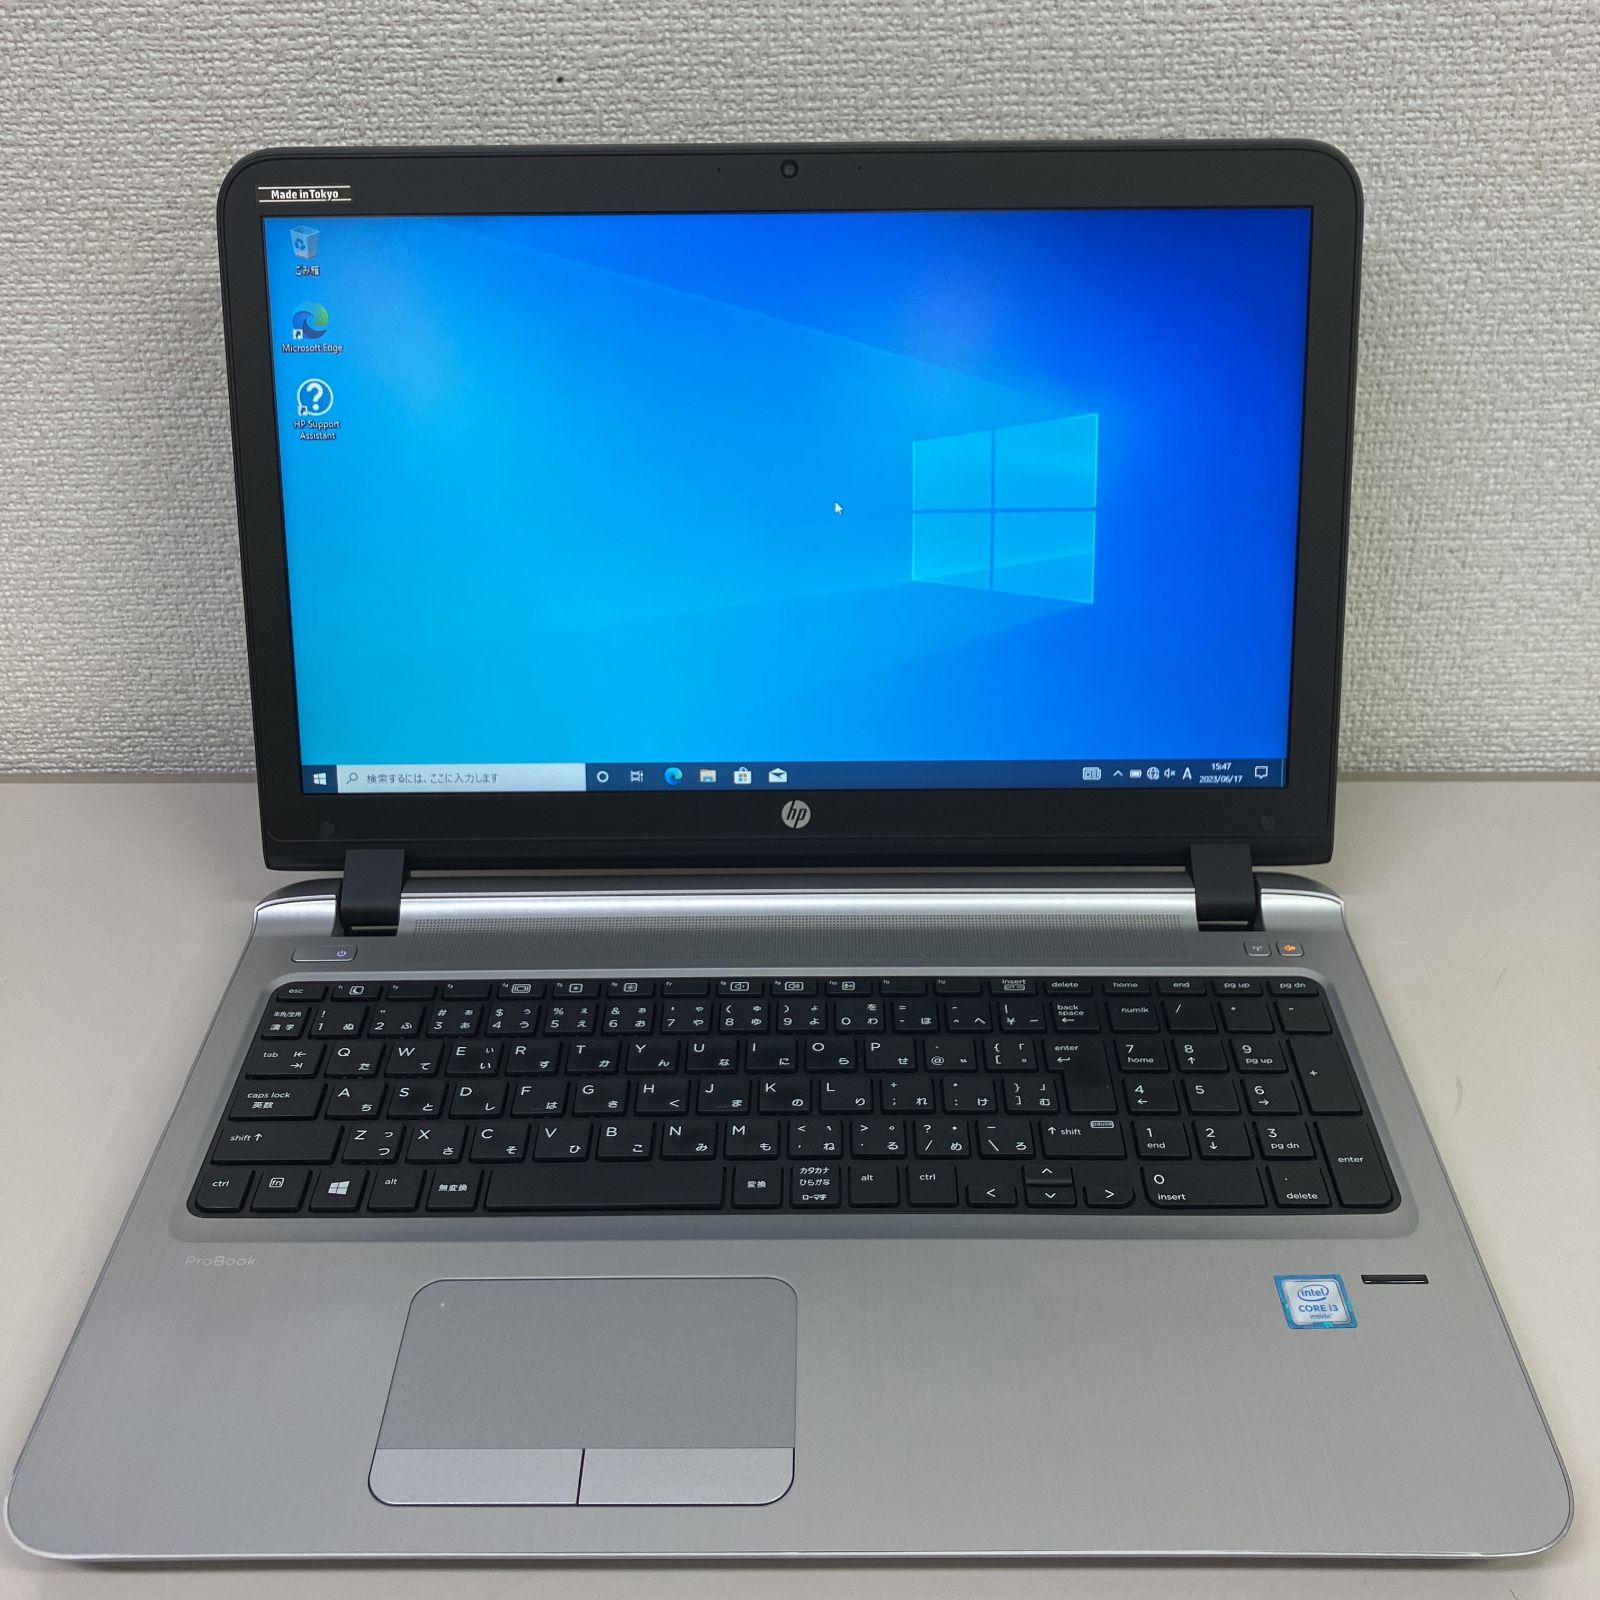 HP ProBook 450 G3 ノートパソコン Windows 10 Pro Core i3/500GB/4GB